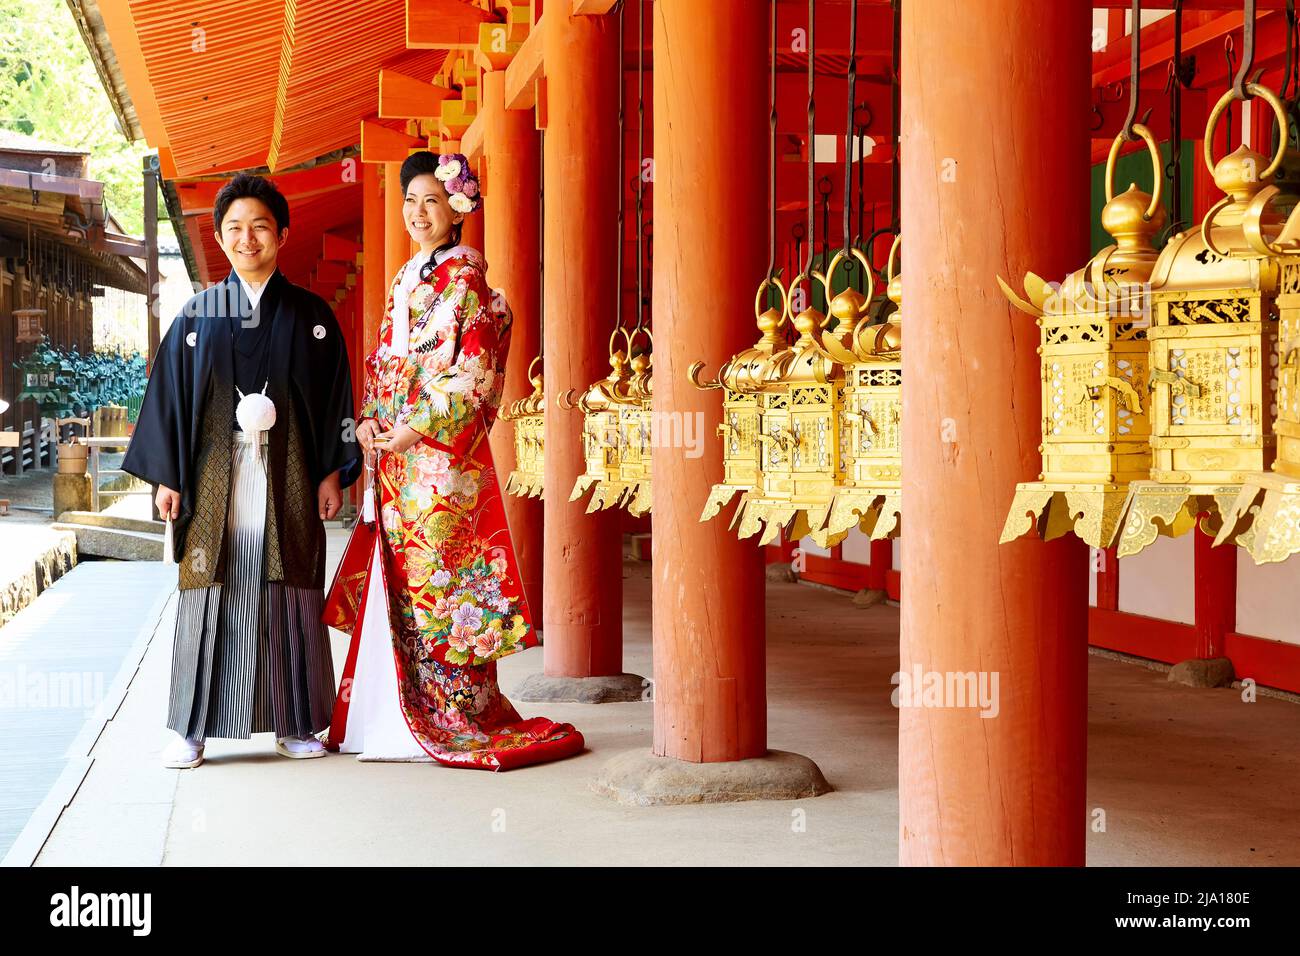 Japan. Nara. Traditional wedding Stock Photo